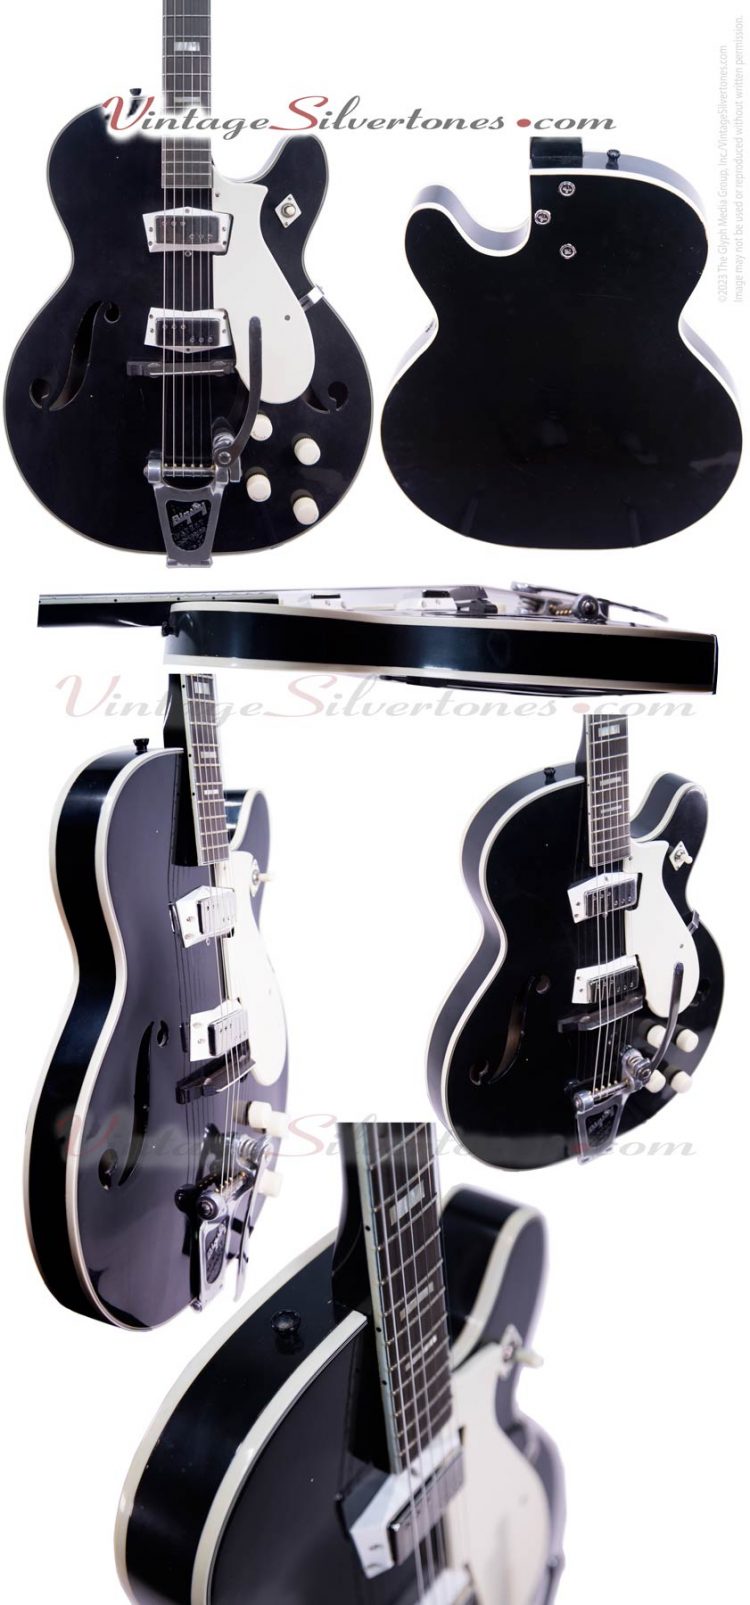 Silvertone 1446 electric guitar body details